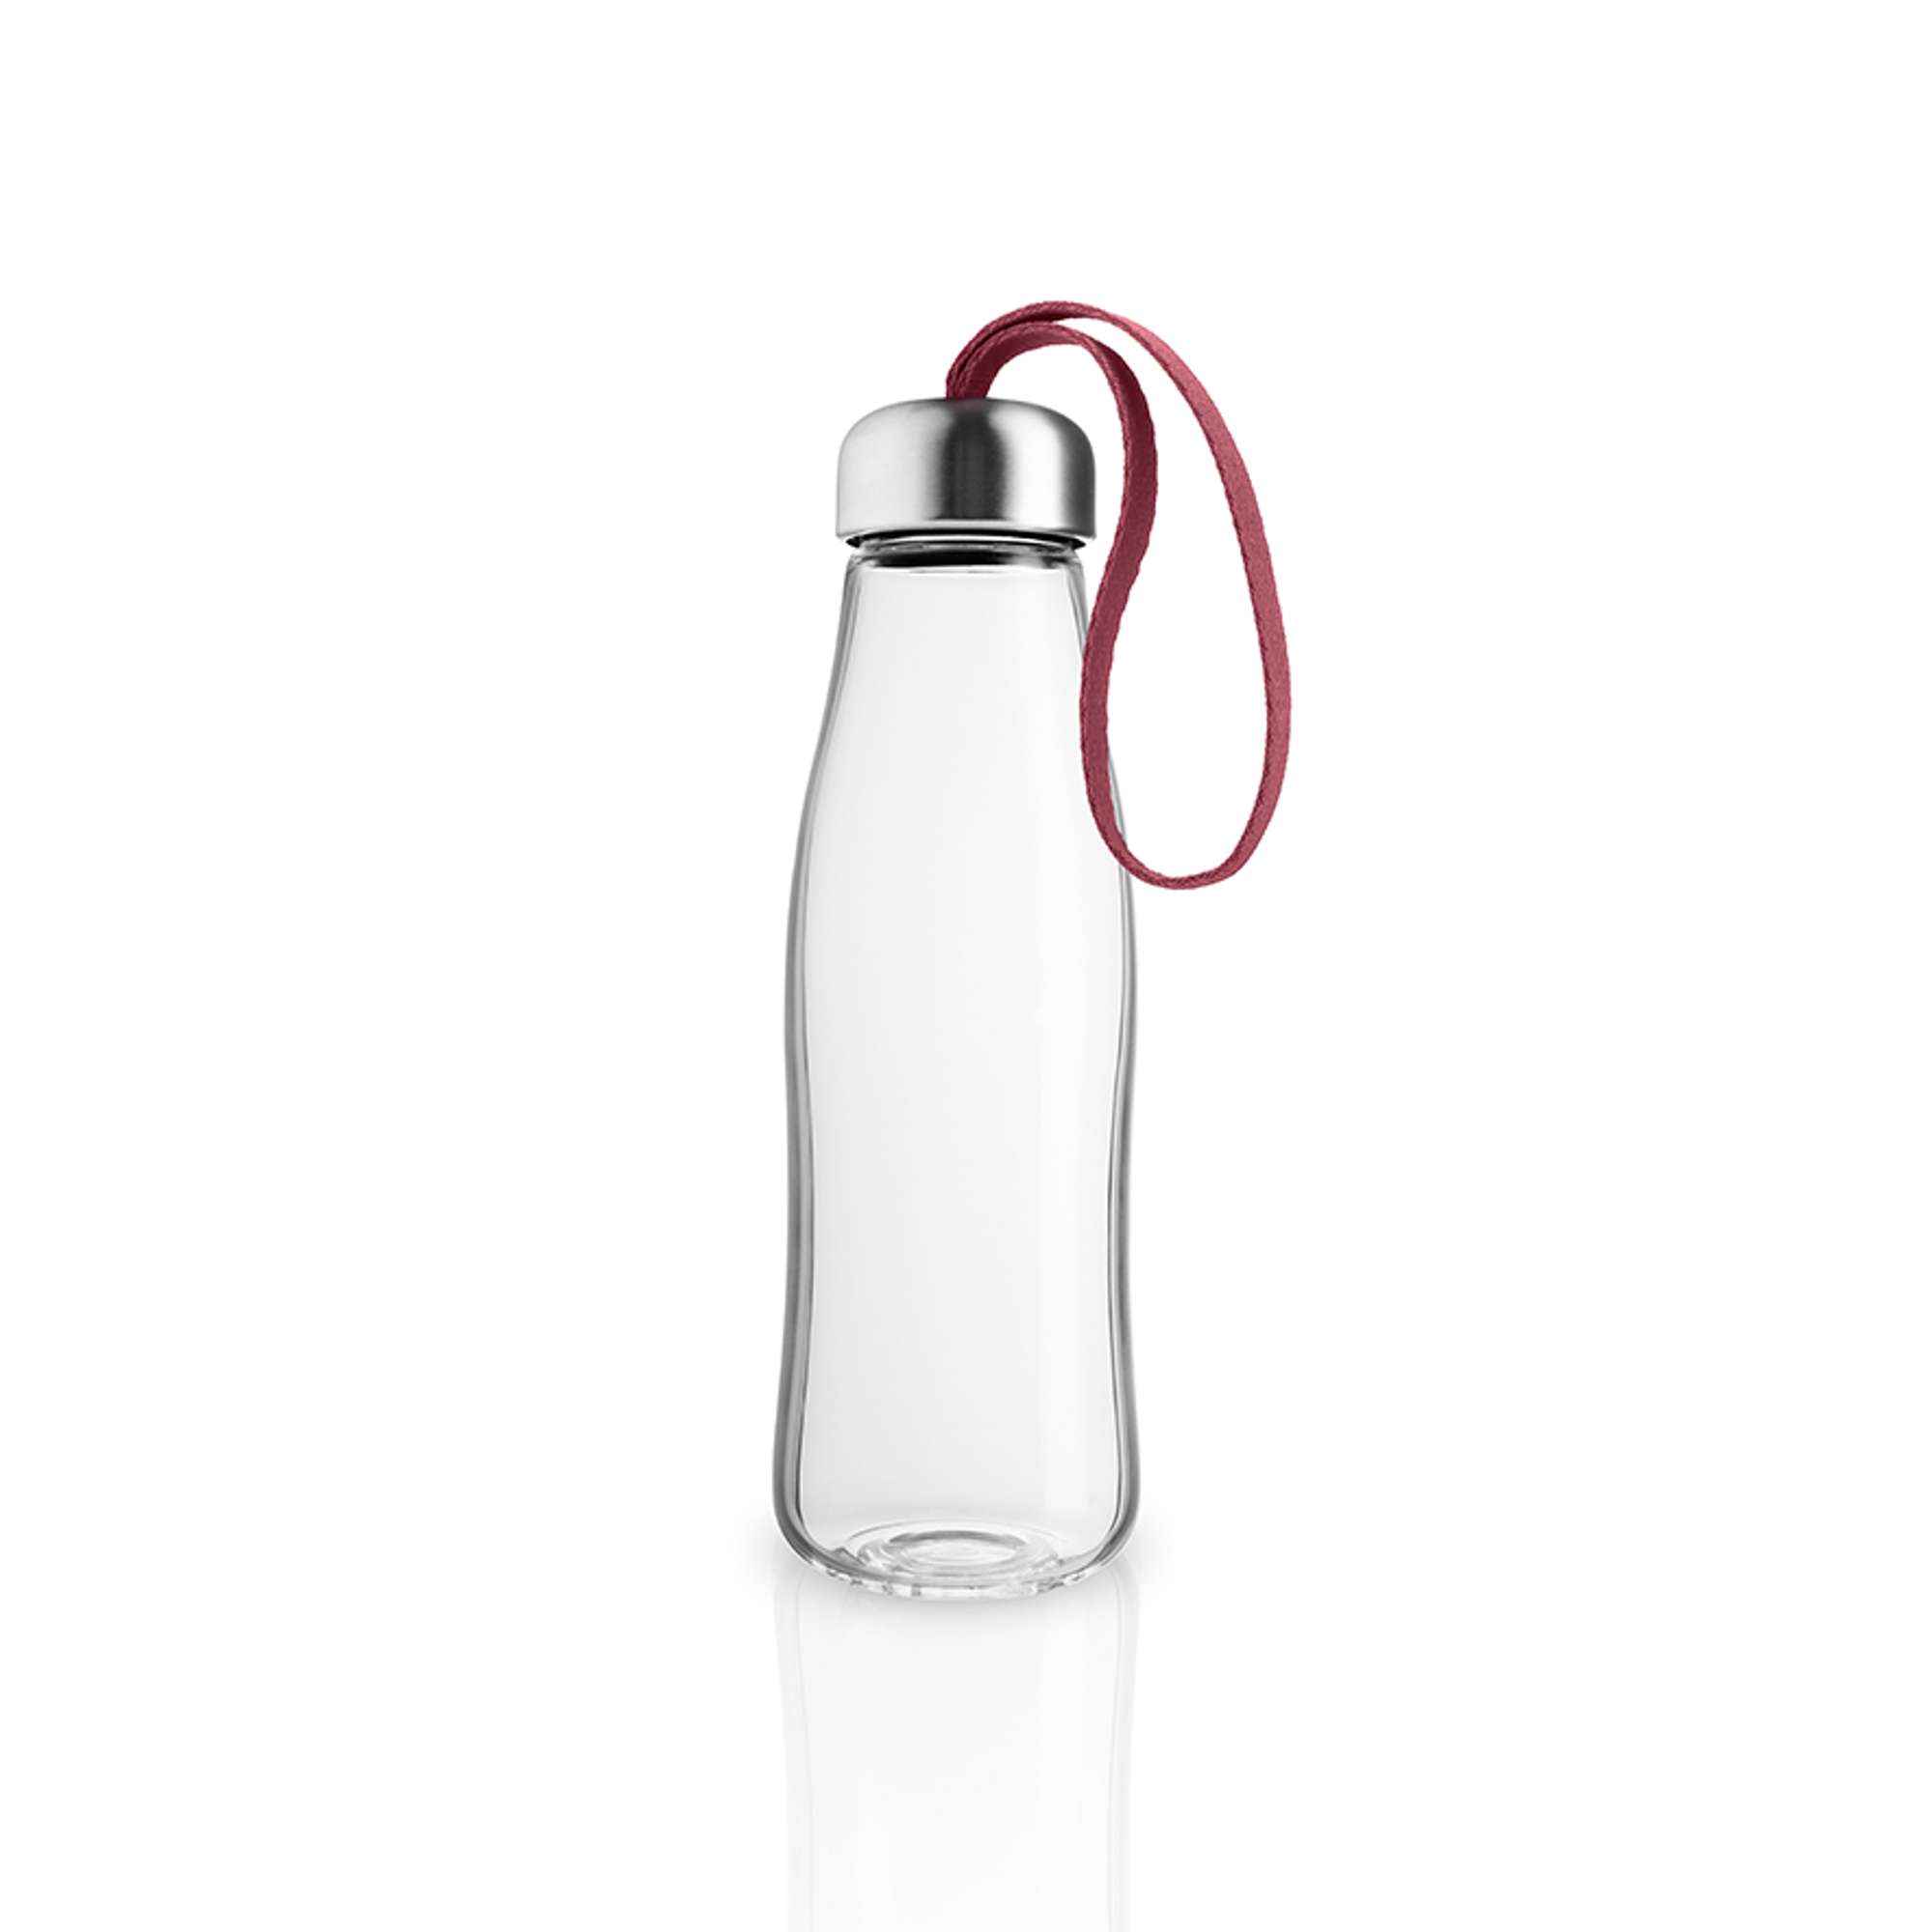 Glass drinking bottle - 0.5 liters - Pomegranate